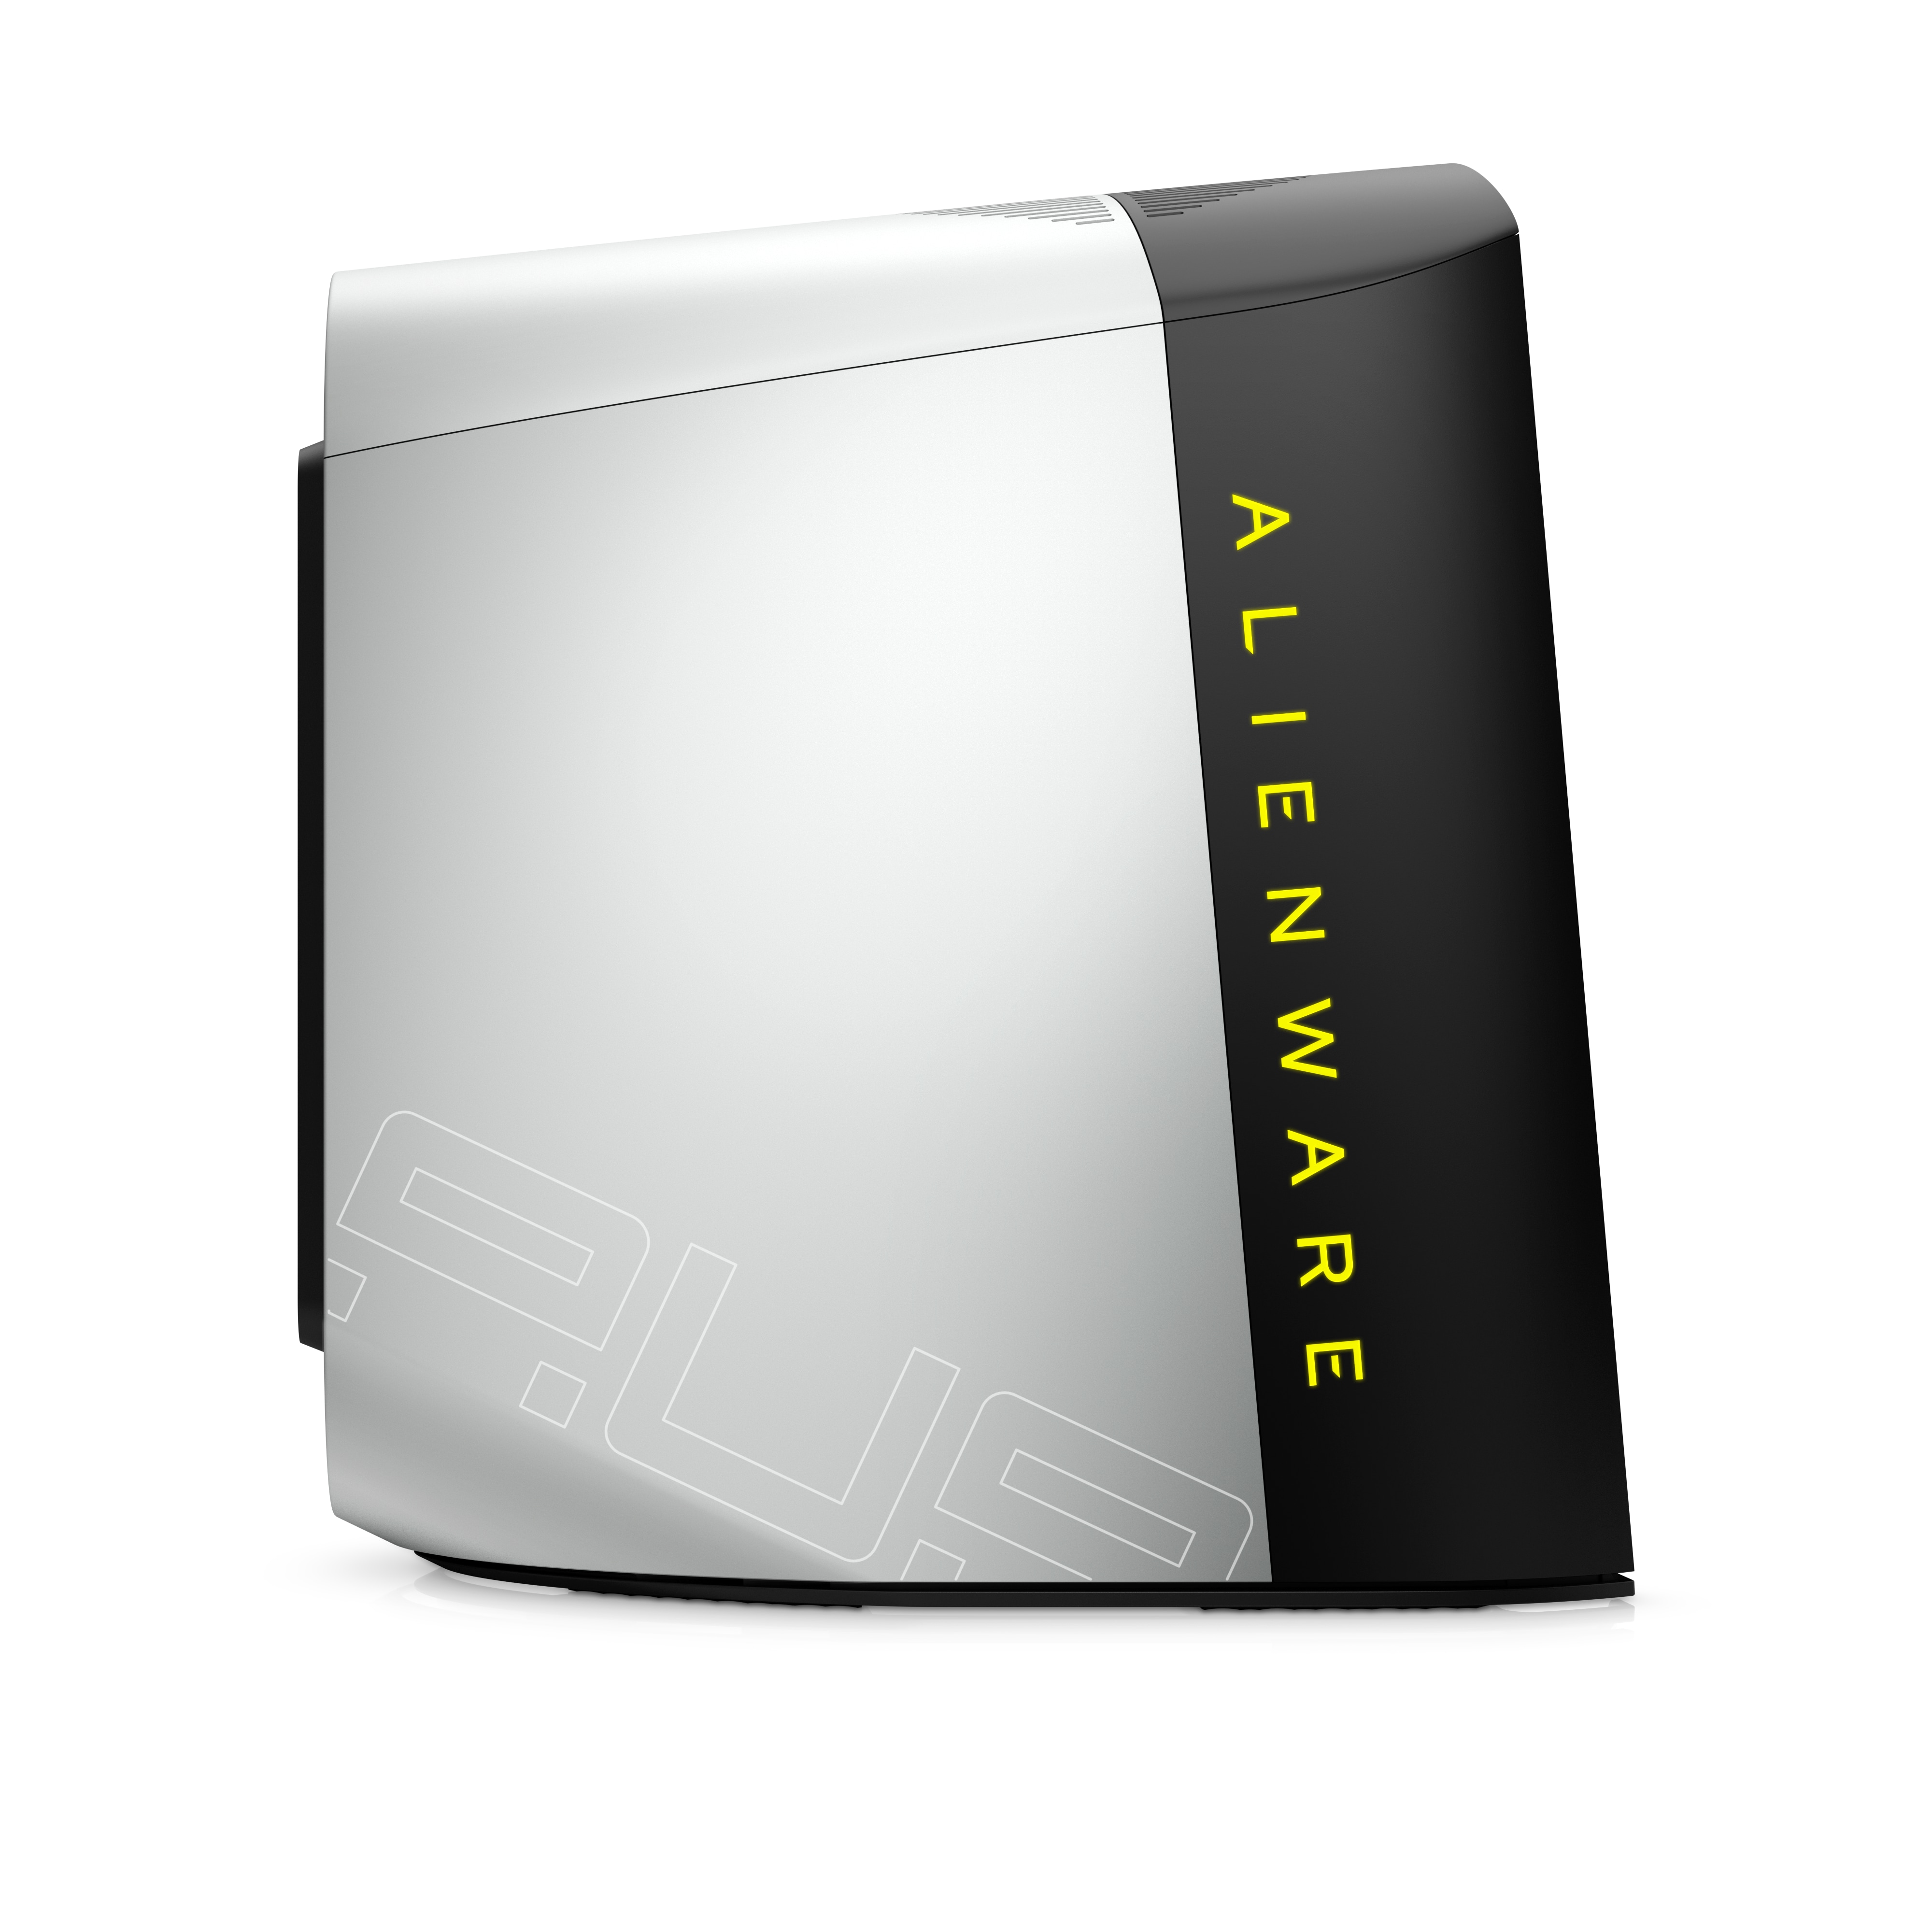 Alienware Aurora Gaming Desktop with AMD Ryzen 5000 Series 